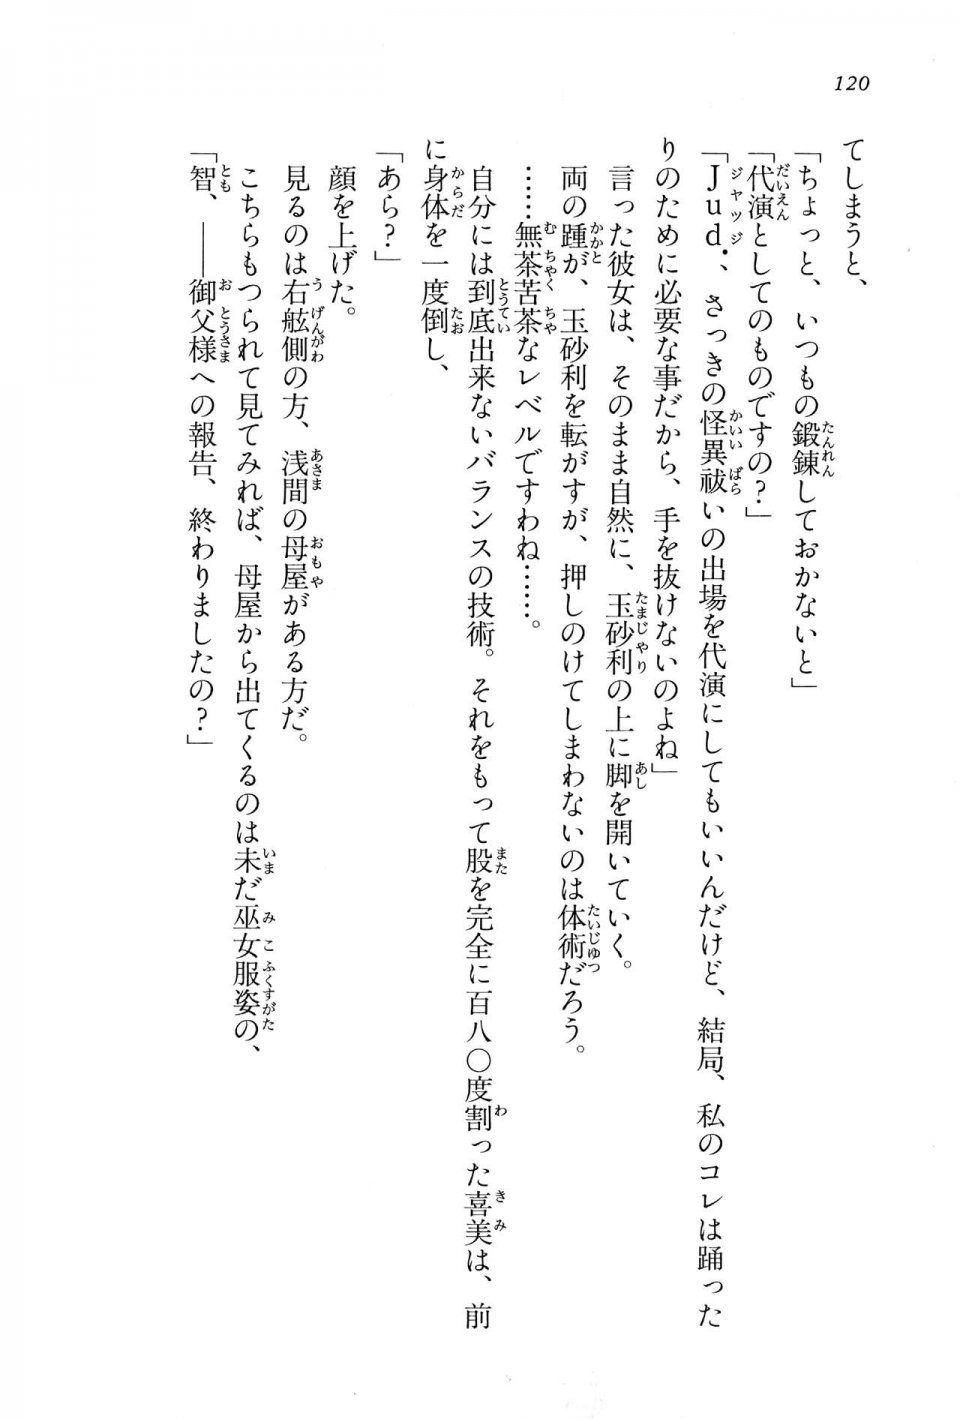 Kyoukai Senjou no Horizon BD Special Mininovel Vol 6(3B) - Photo #124